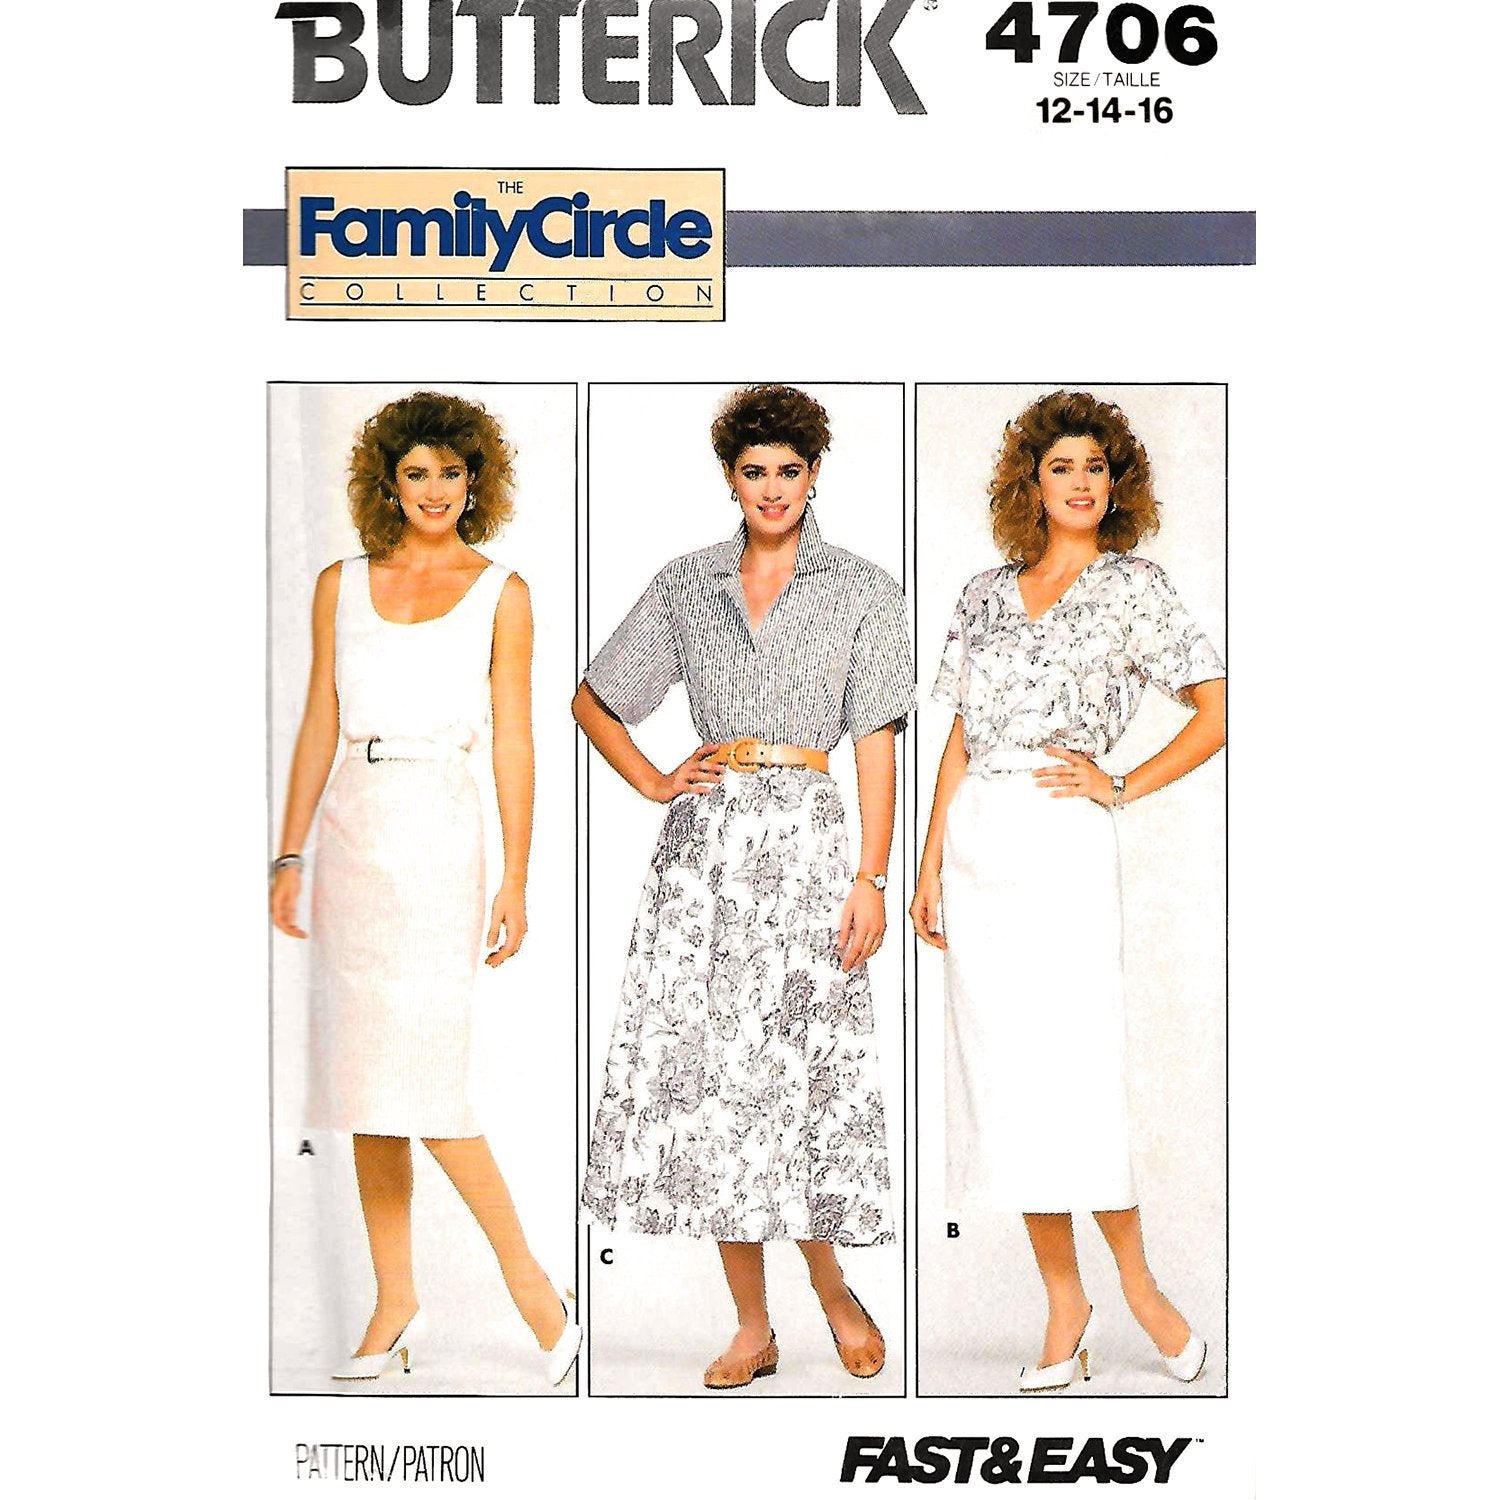 Butterick 4706 skirt sewing pattern